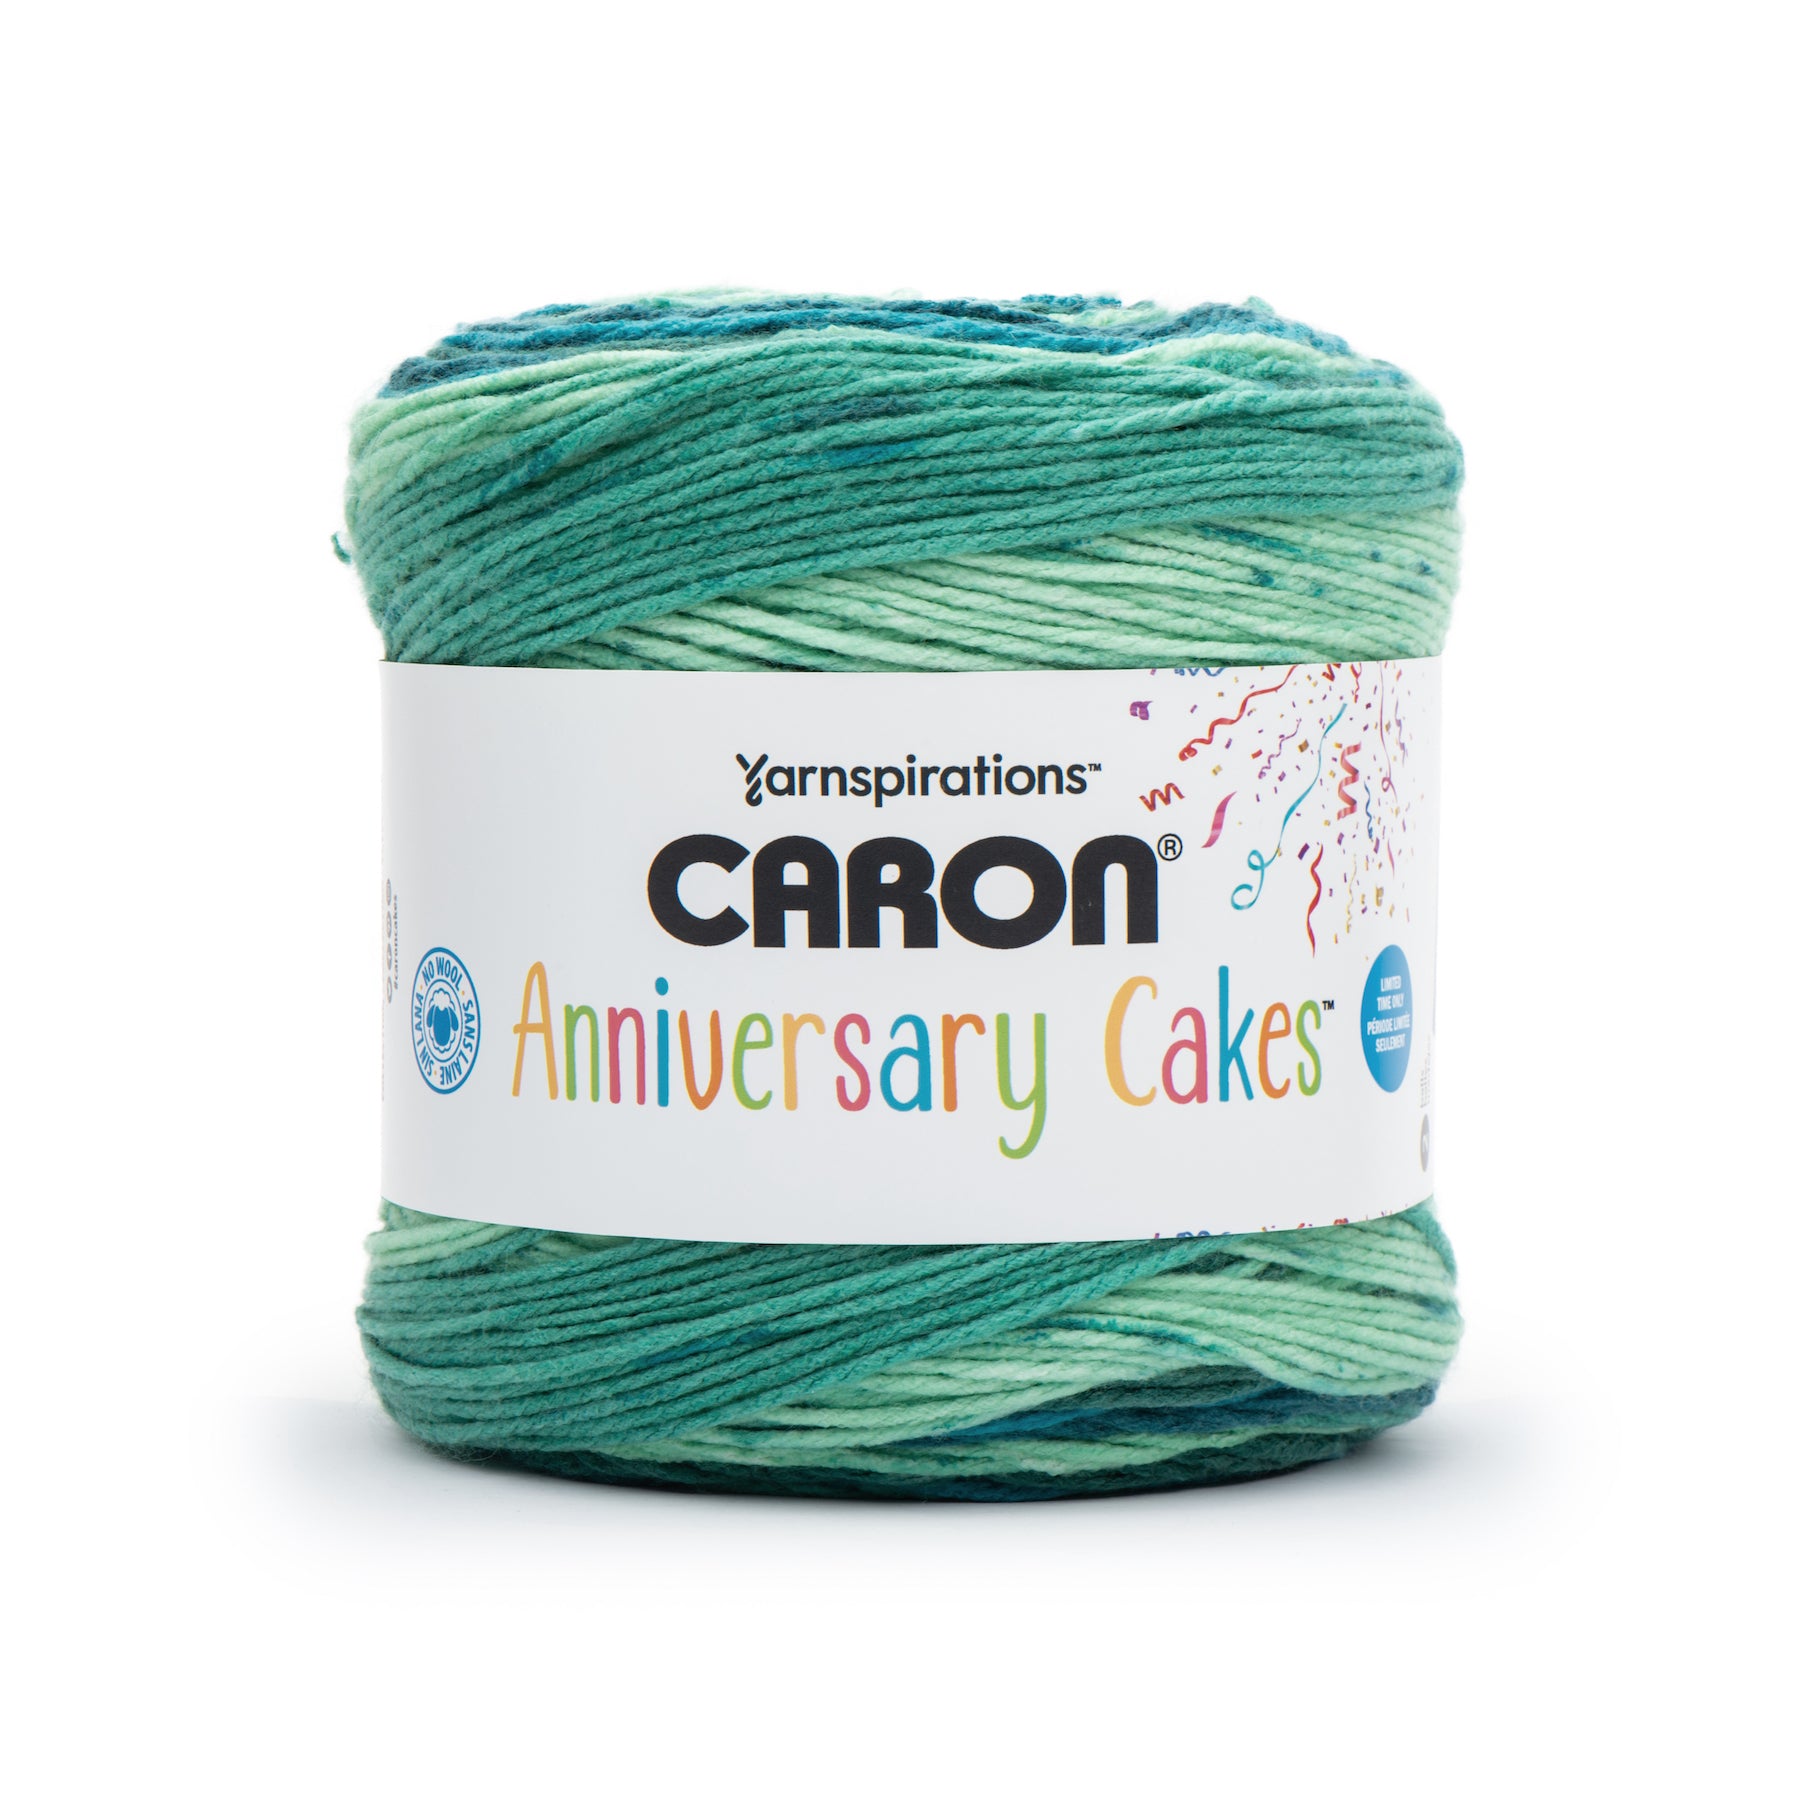 Yarnspirations Caron Anniversary Cakes Pelican